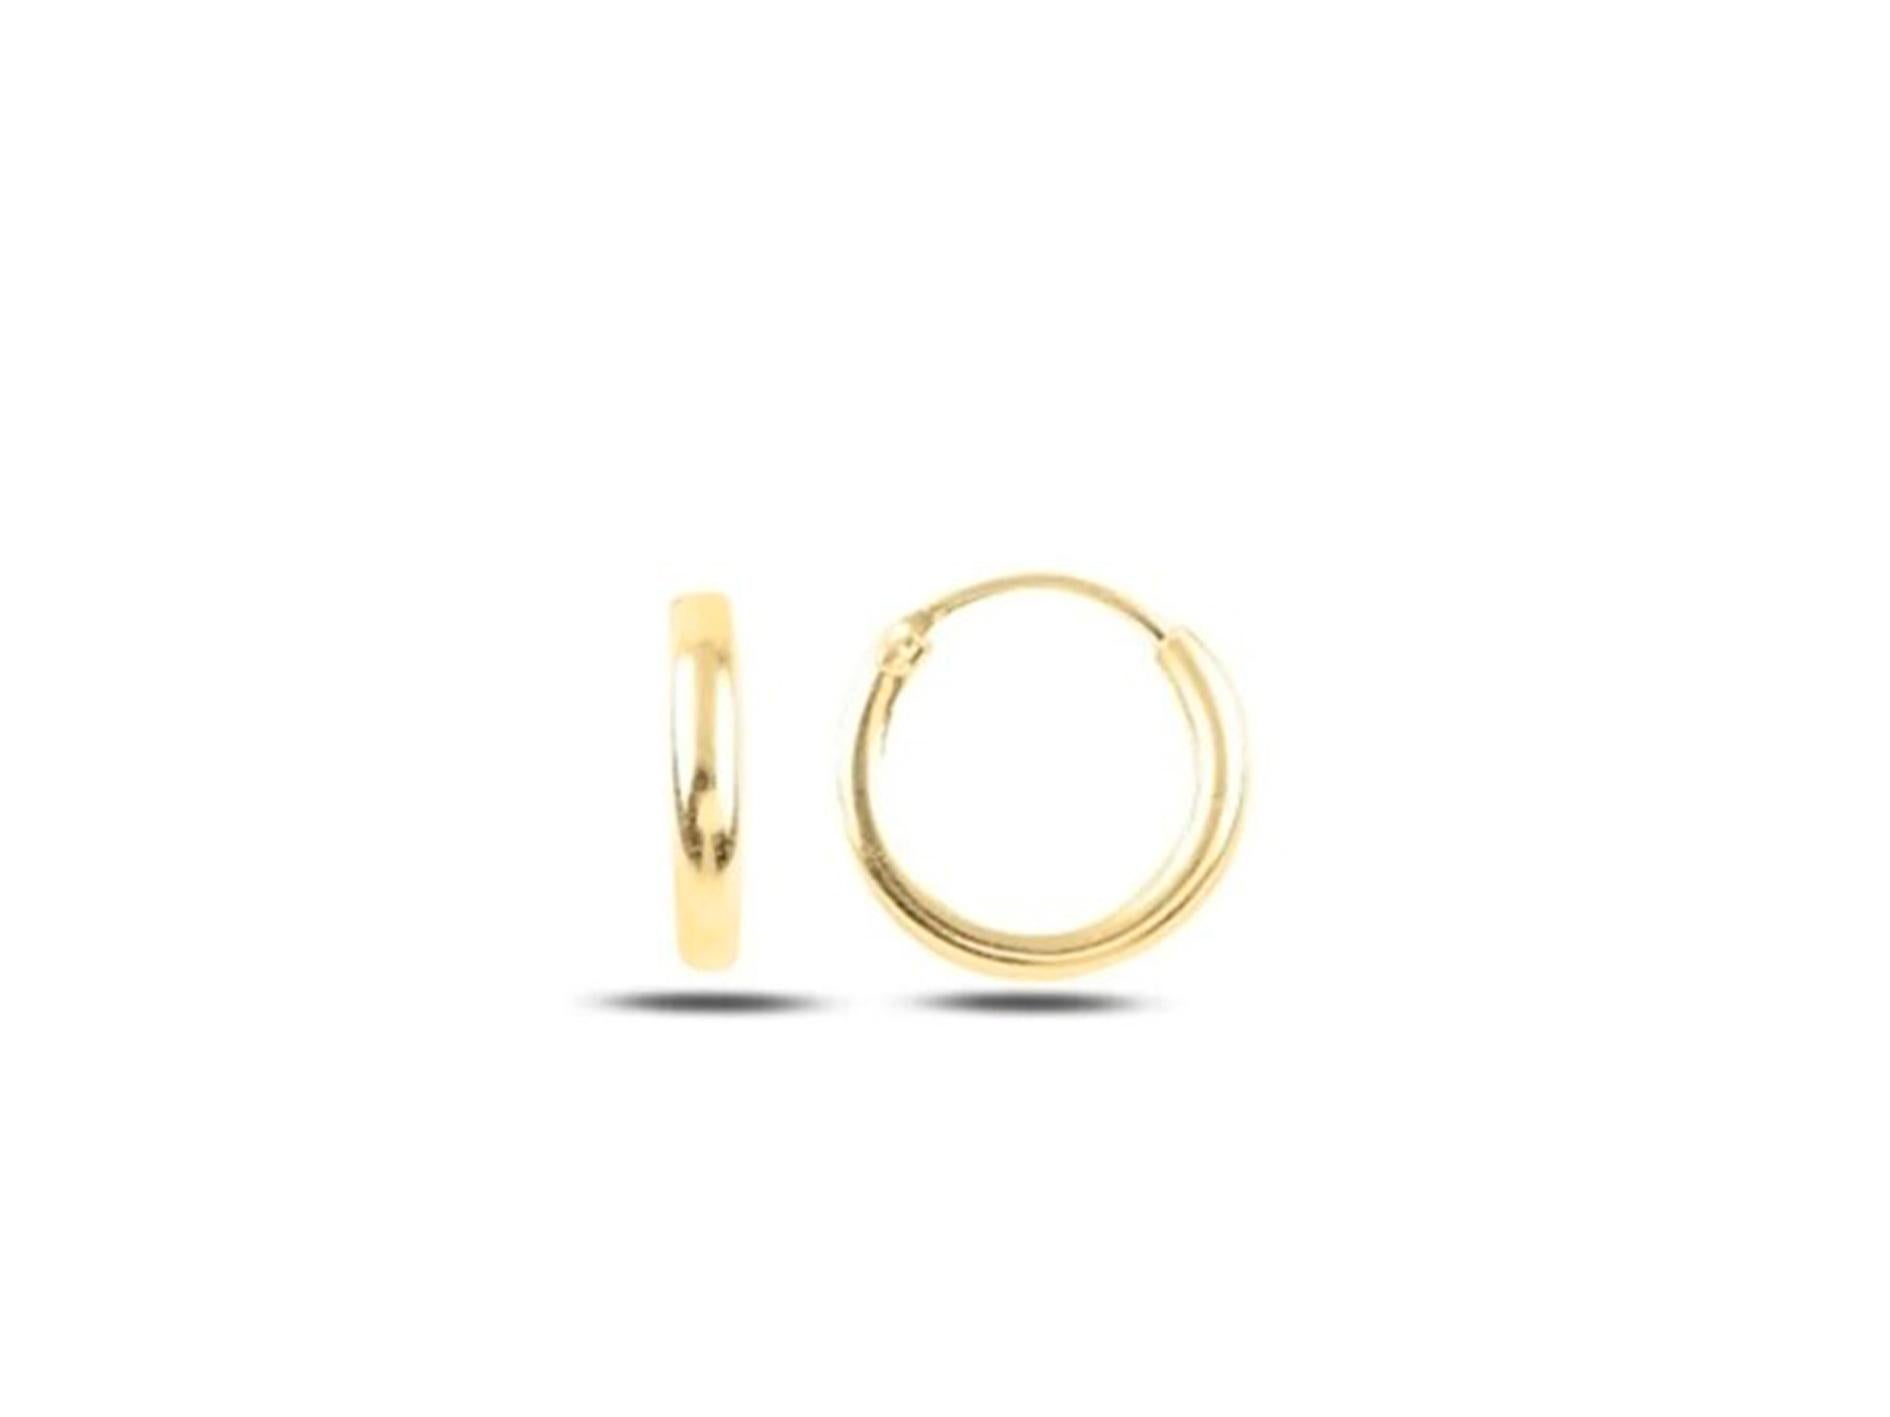 Briolette Cut Hoop Earrings and Garnet Briolette Charms in 14k Gold For Sale